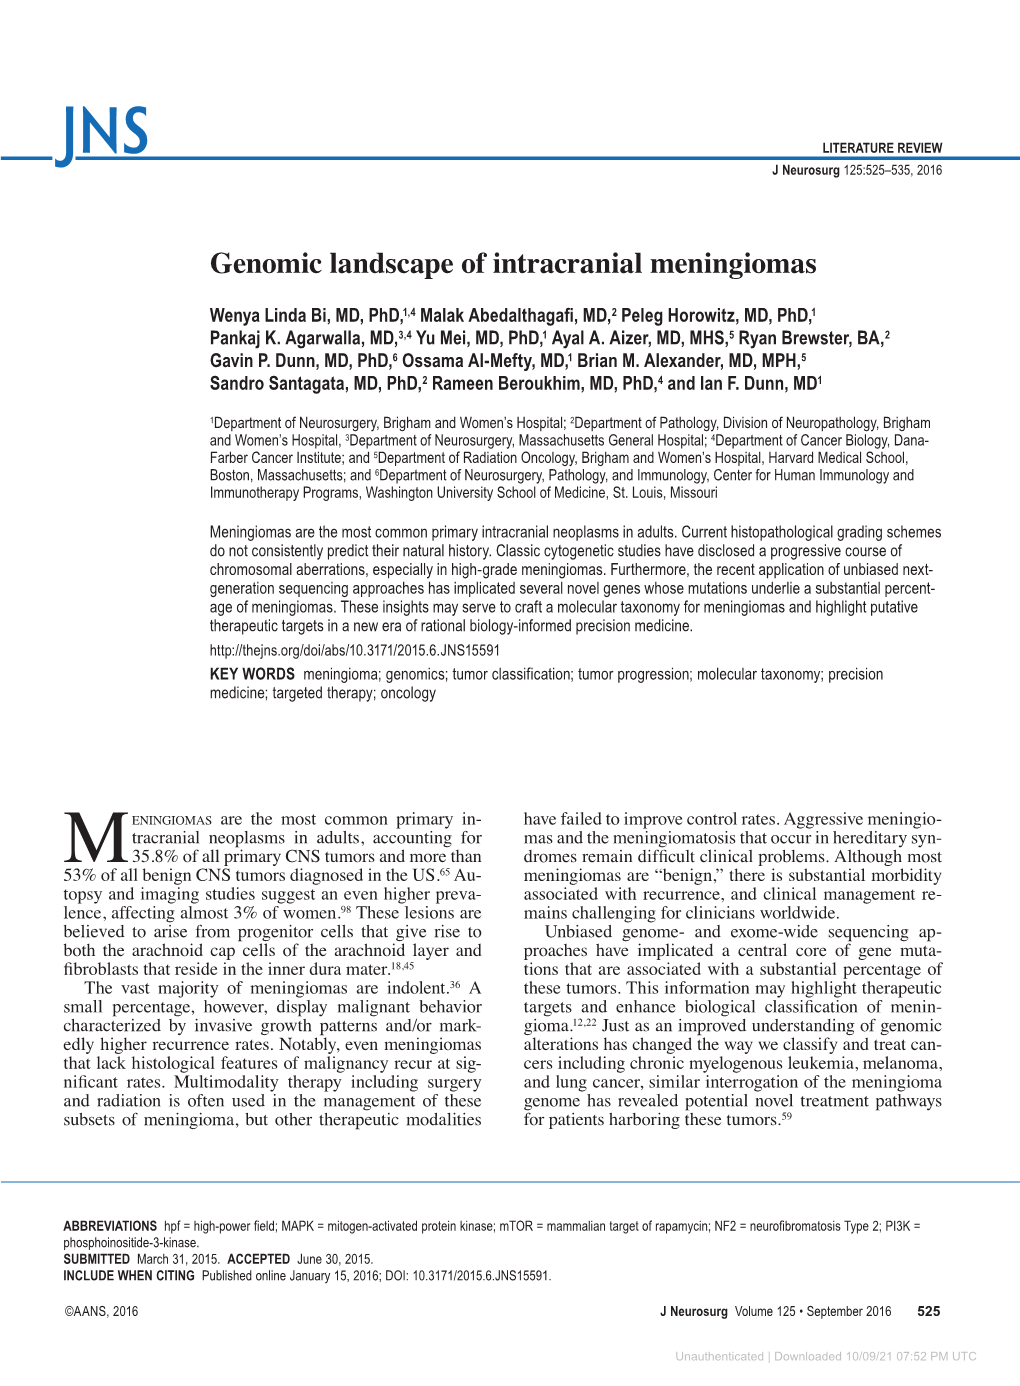 Genomic Landscape of Intracranial Meningiomas